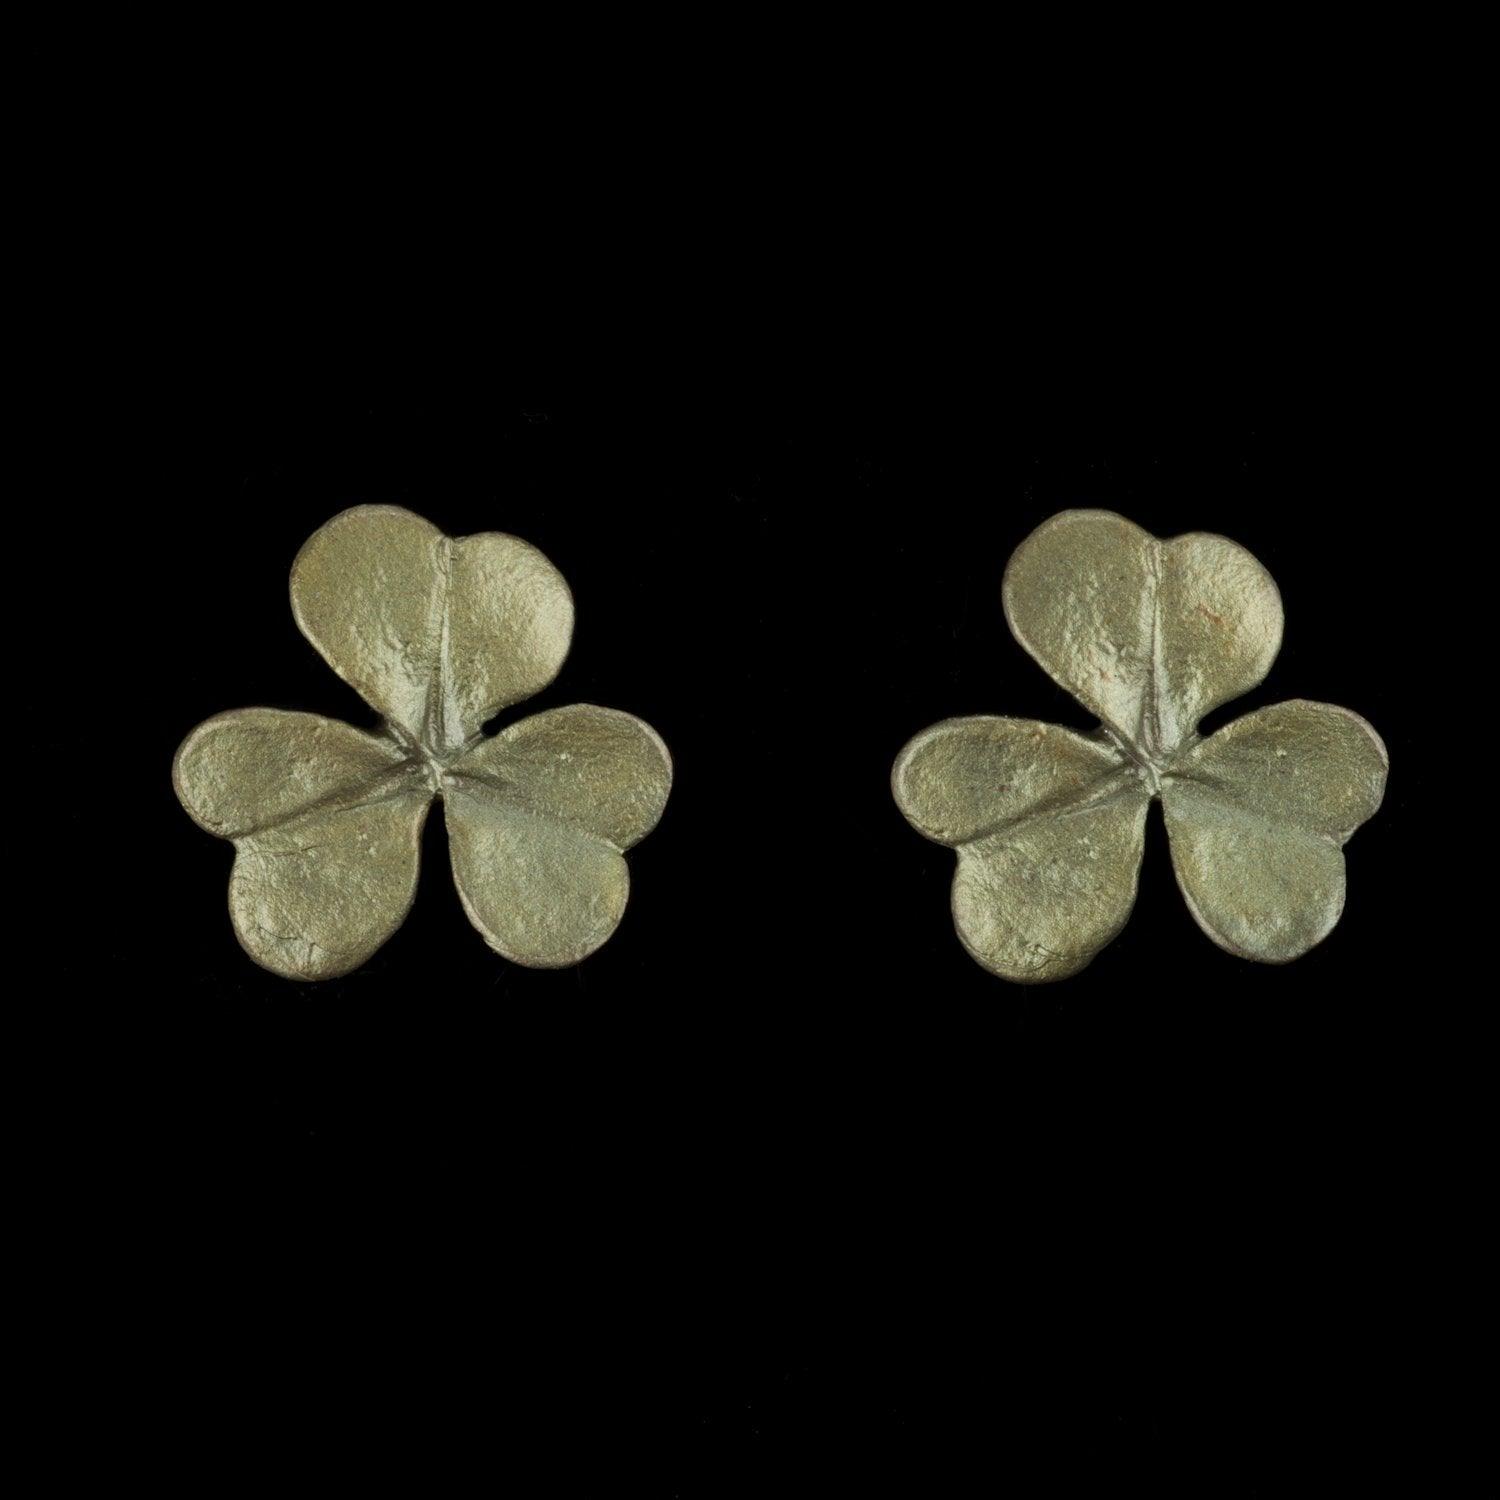 Clover Earrings - Small Post - Michael Michaud Jewellery